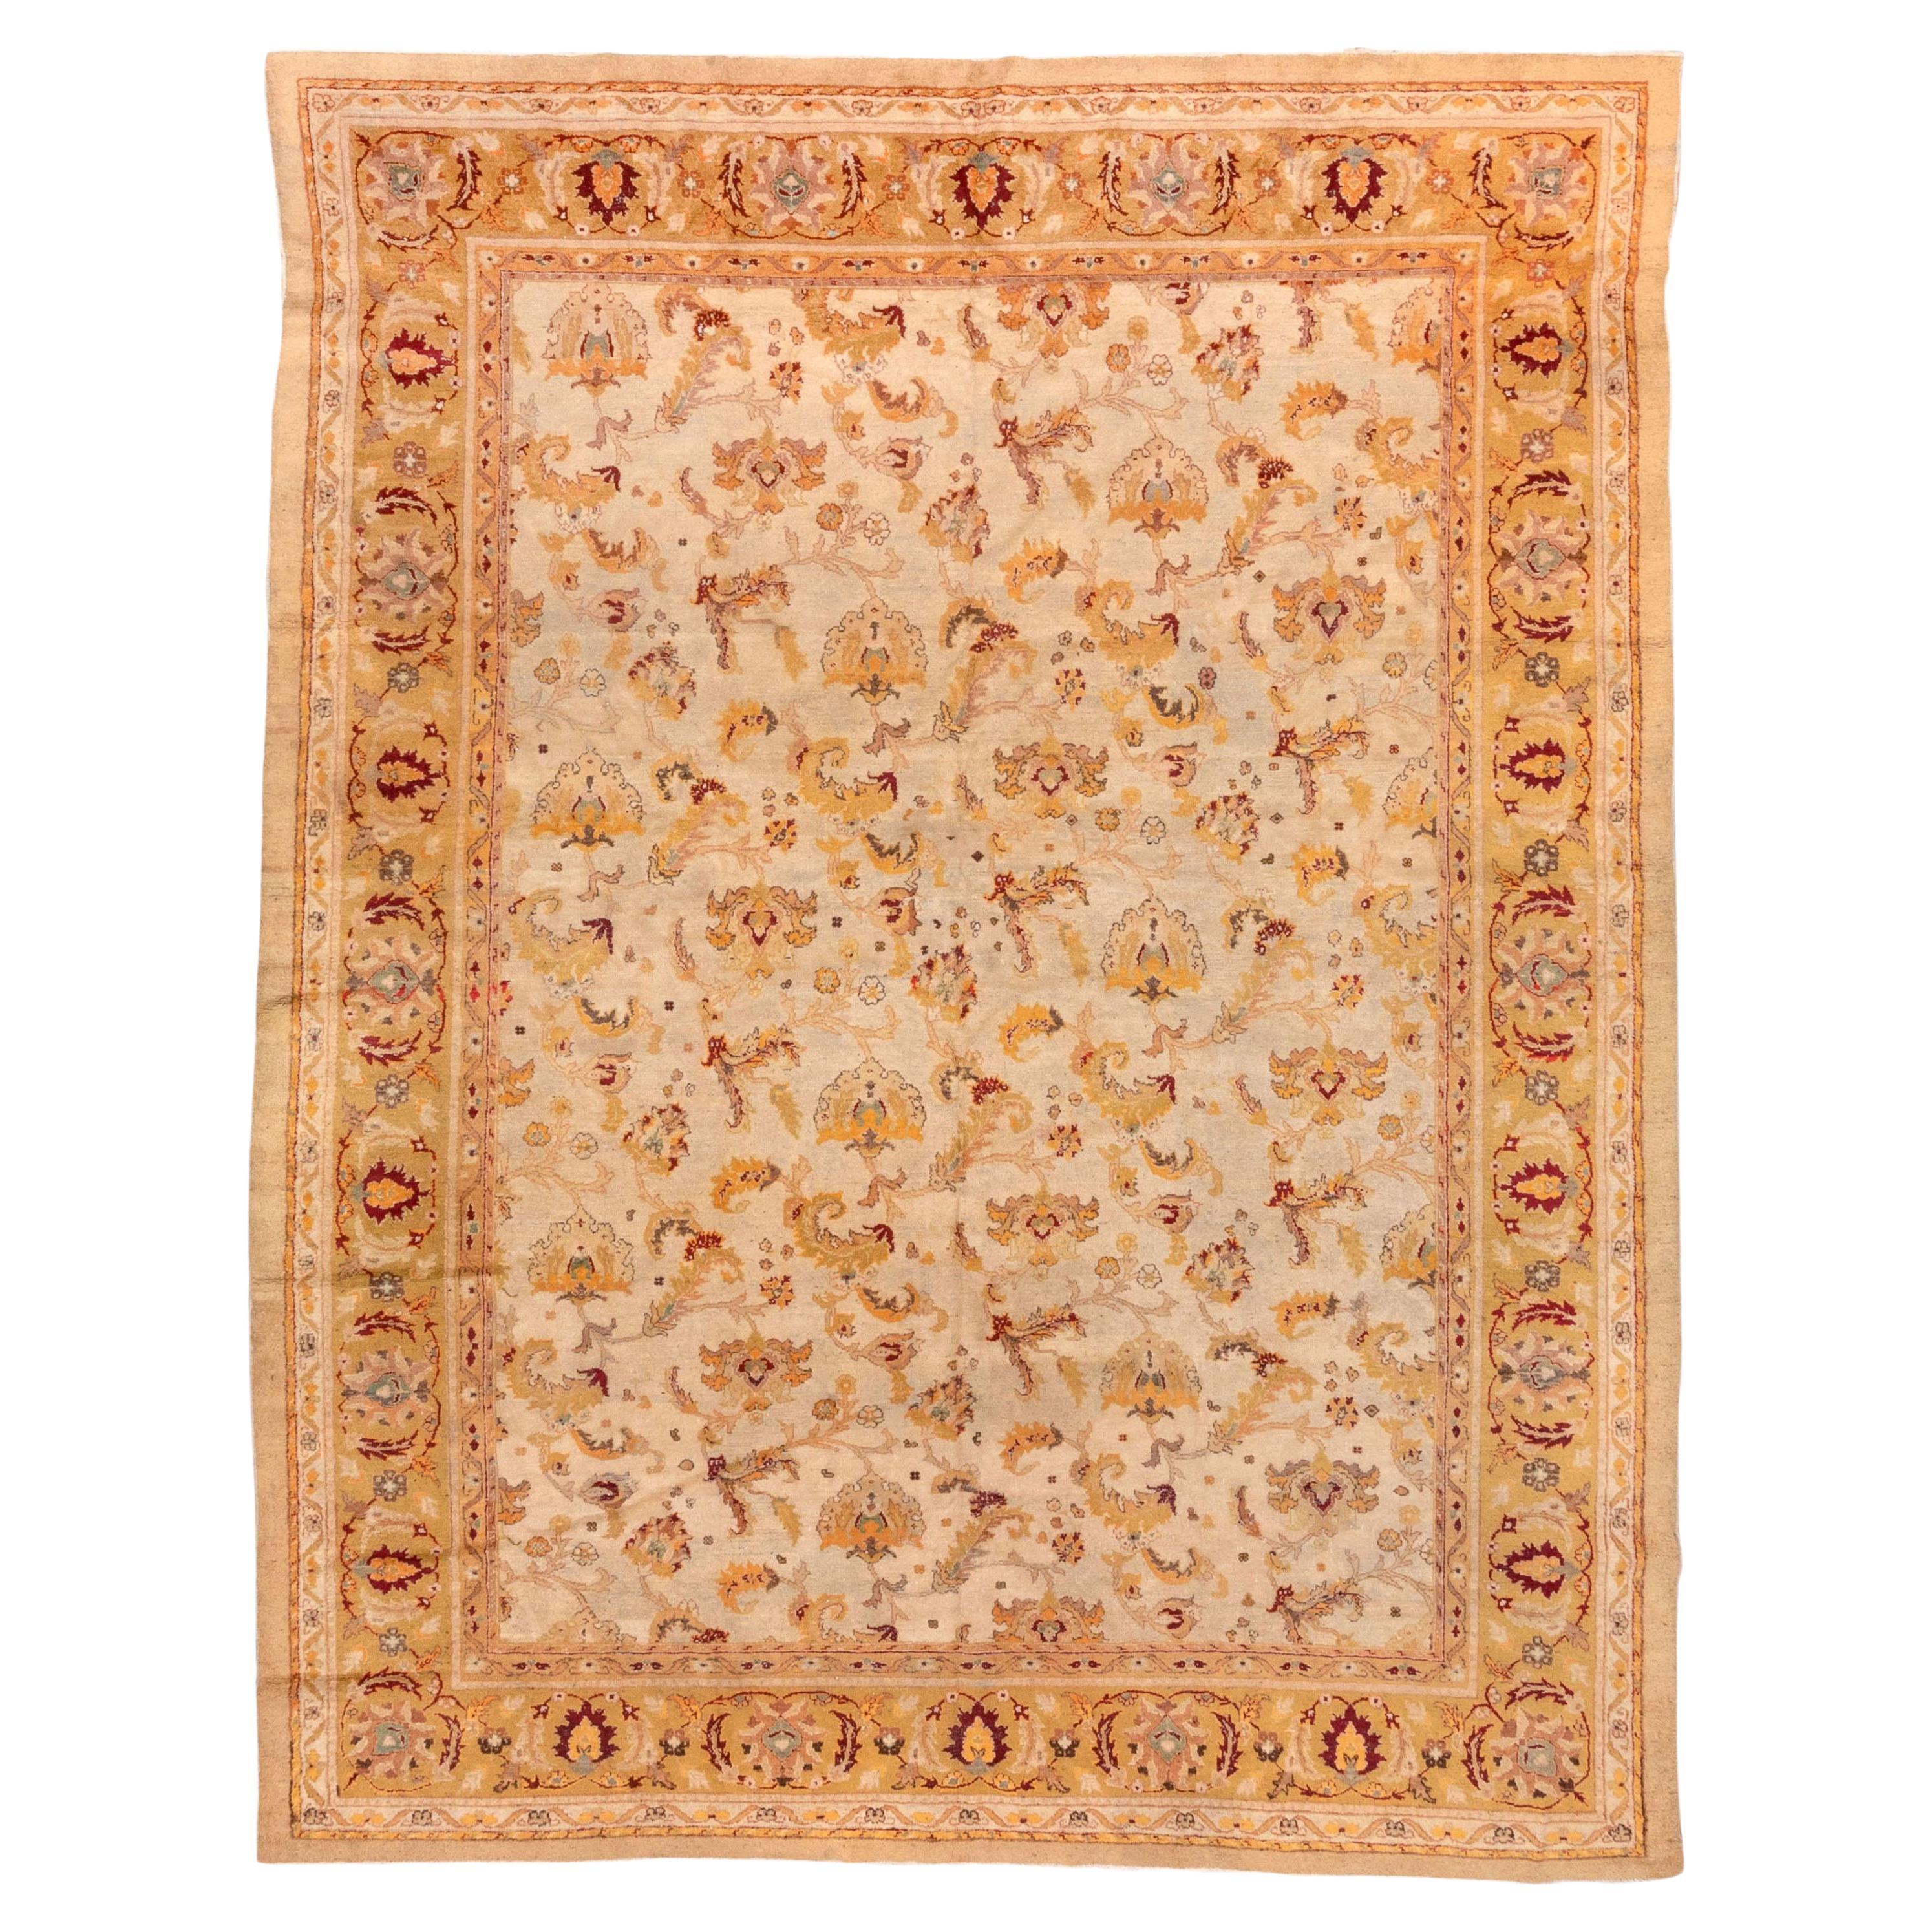 Fine Antique Indian Amritzar Carpet, Ivory Field, Allover Field, Gold Borders